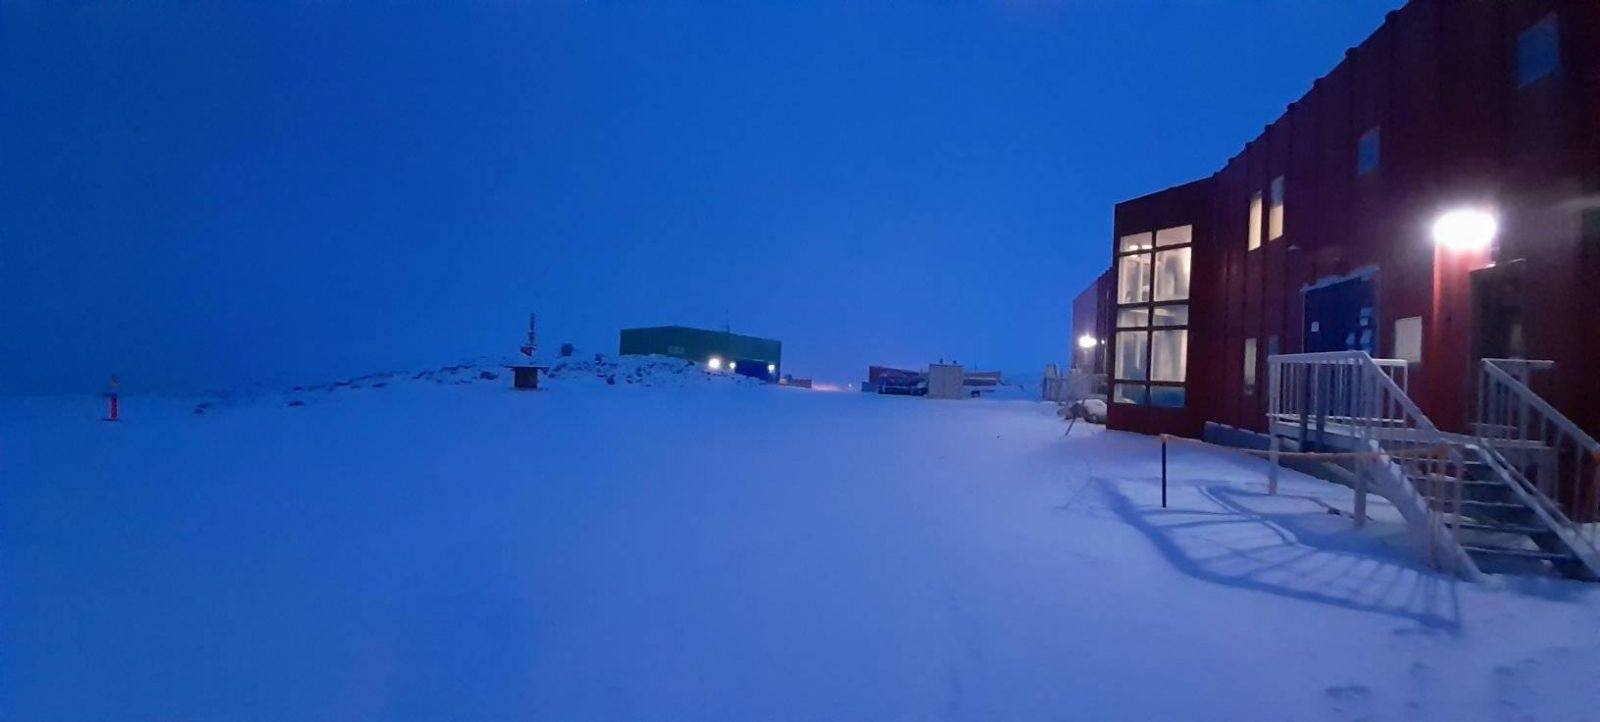 VK0WN Casey Station, Antarctica